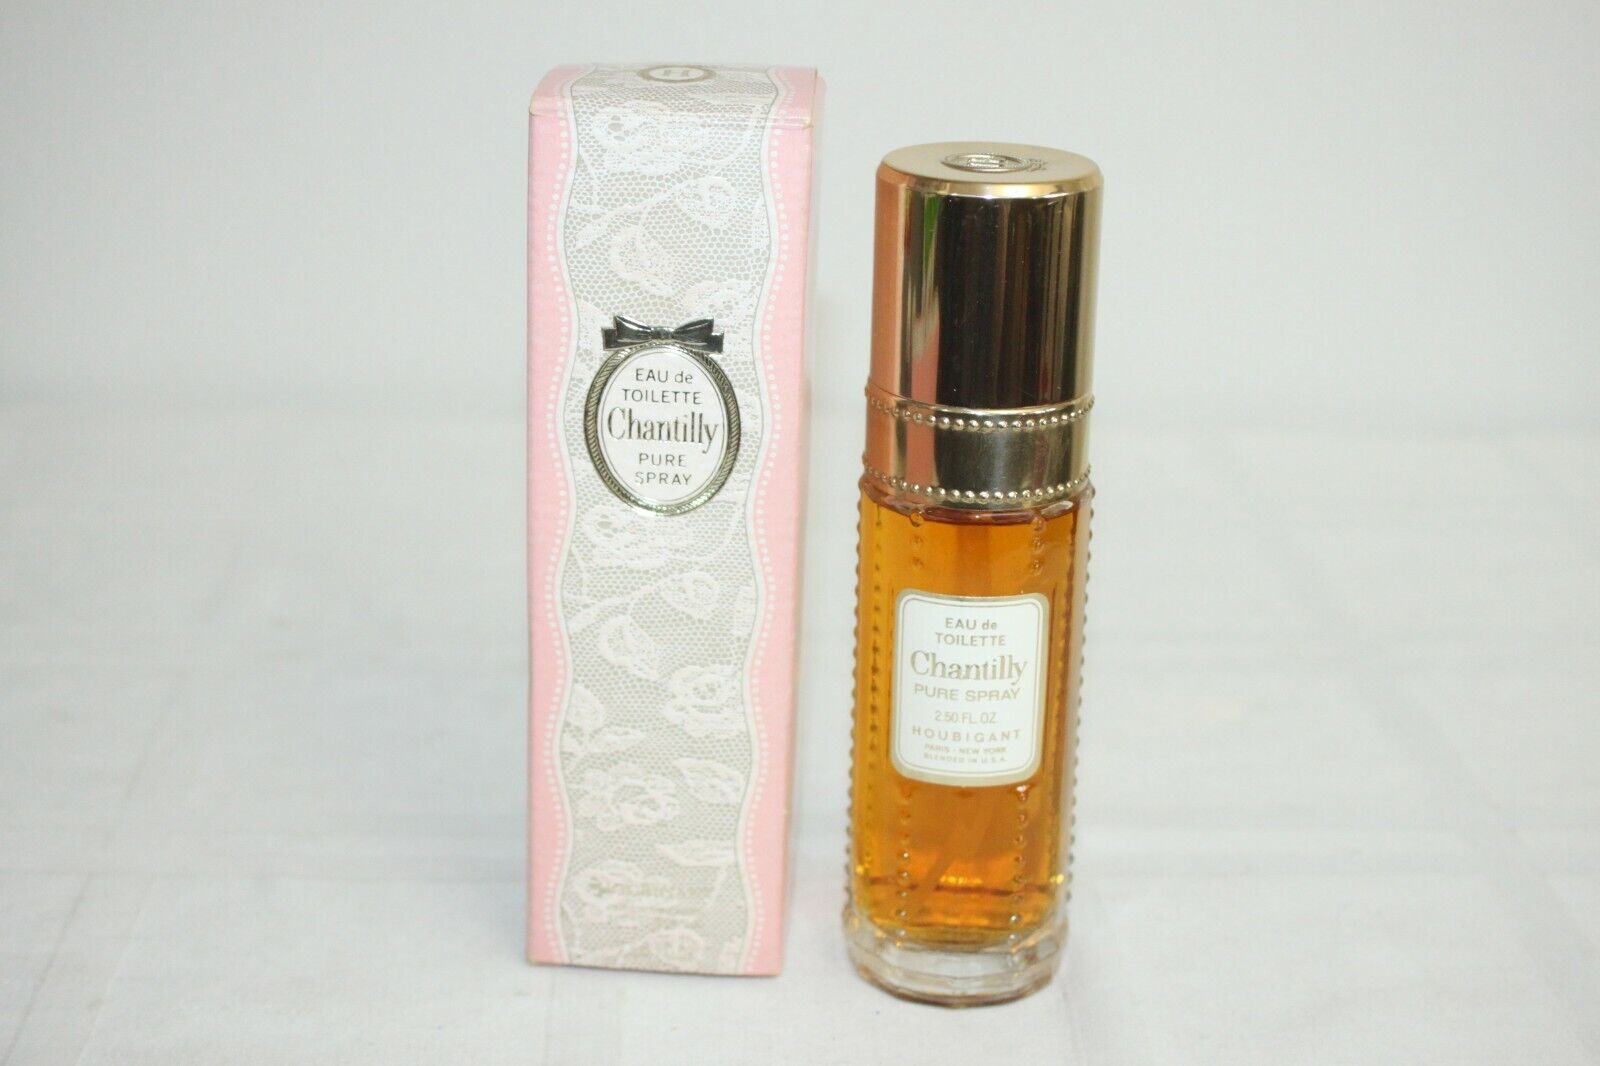 Houbigant CHANTILLY Eau de Toilette 2.50 fl oz PURE SPRAY Perfume with Box